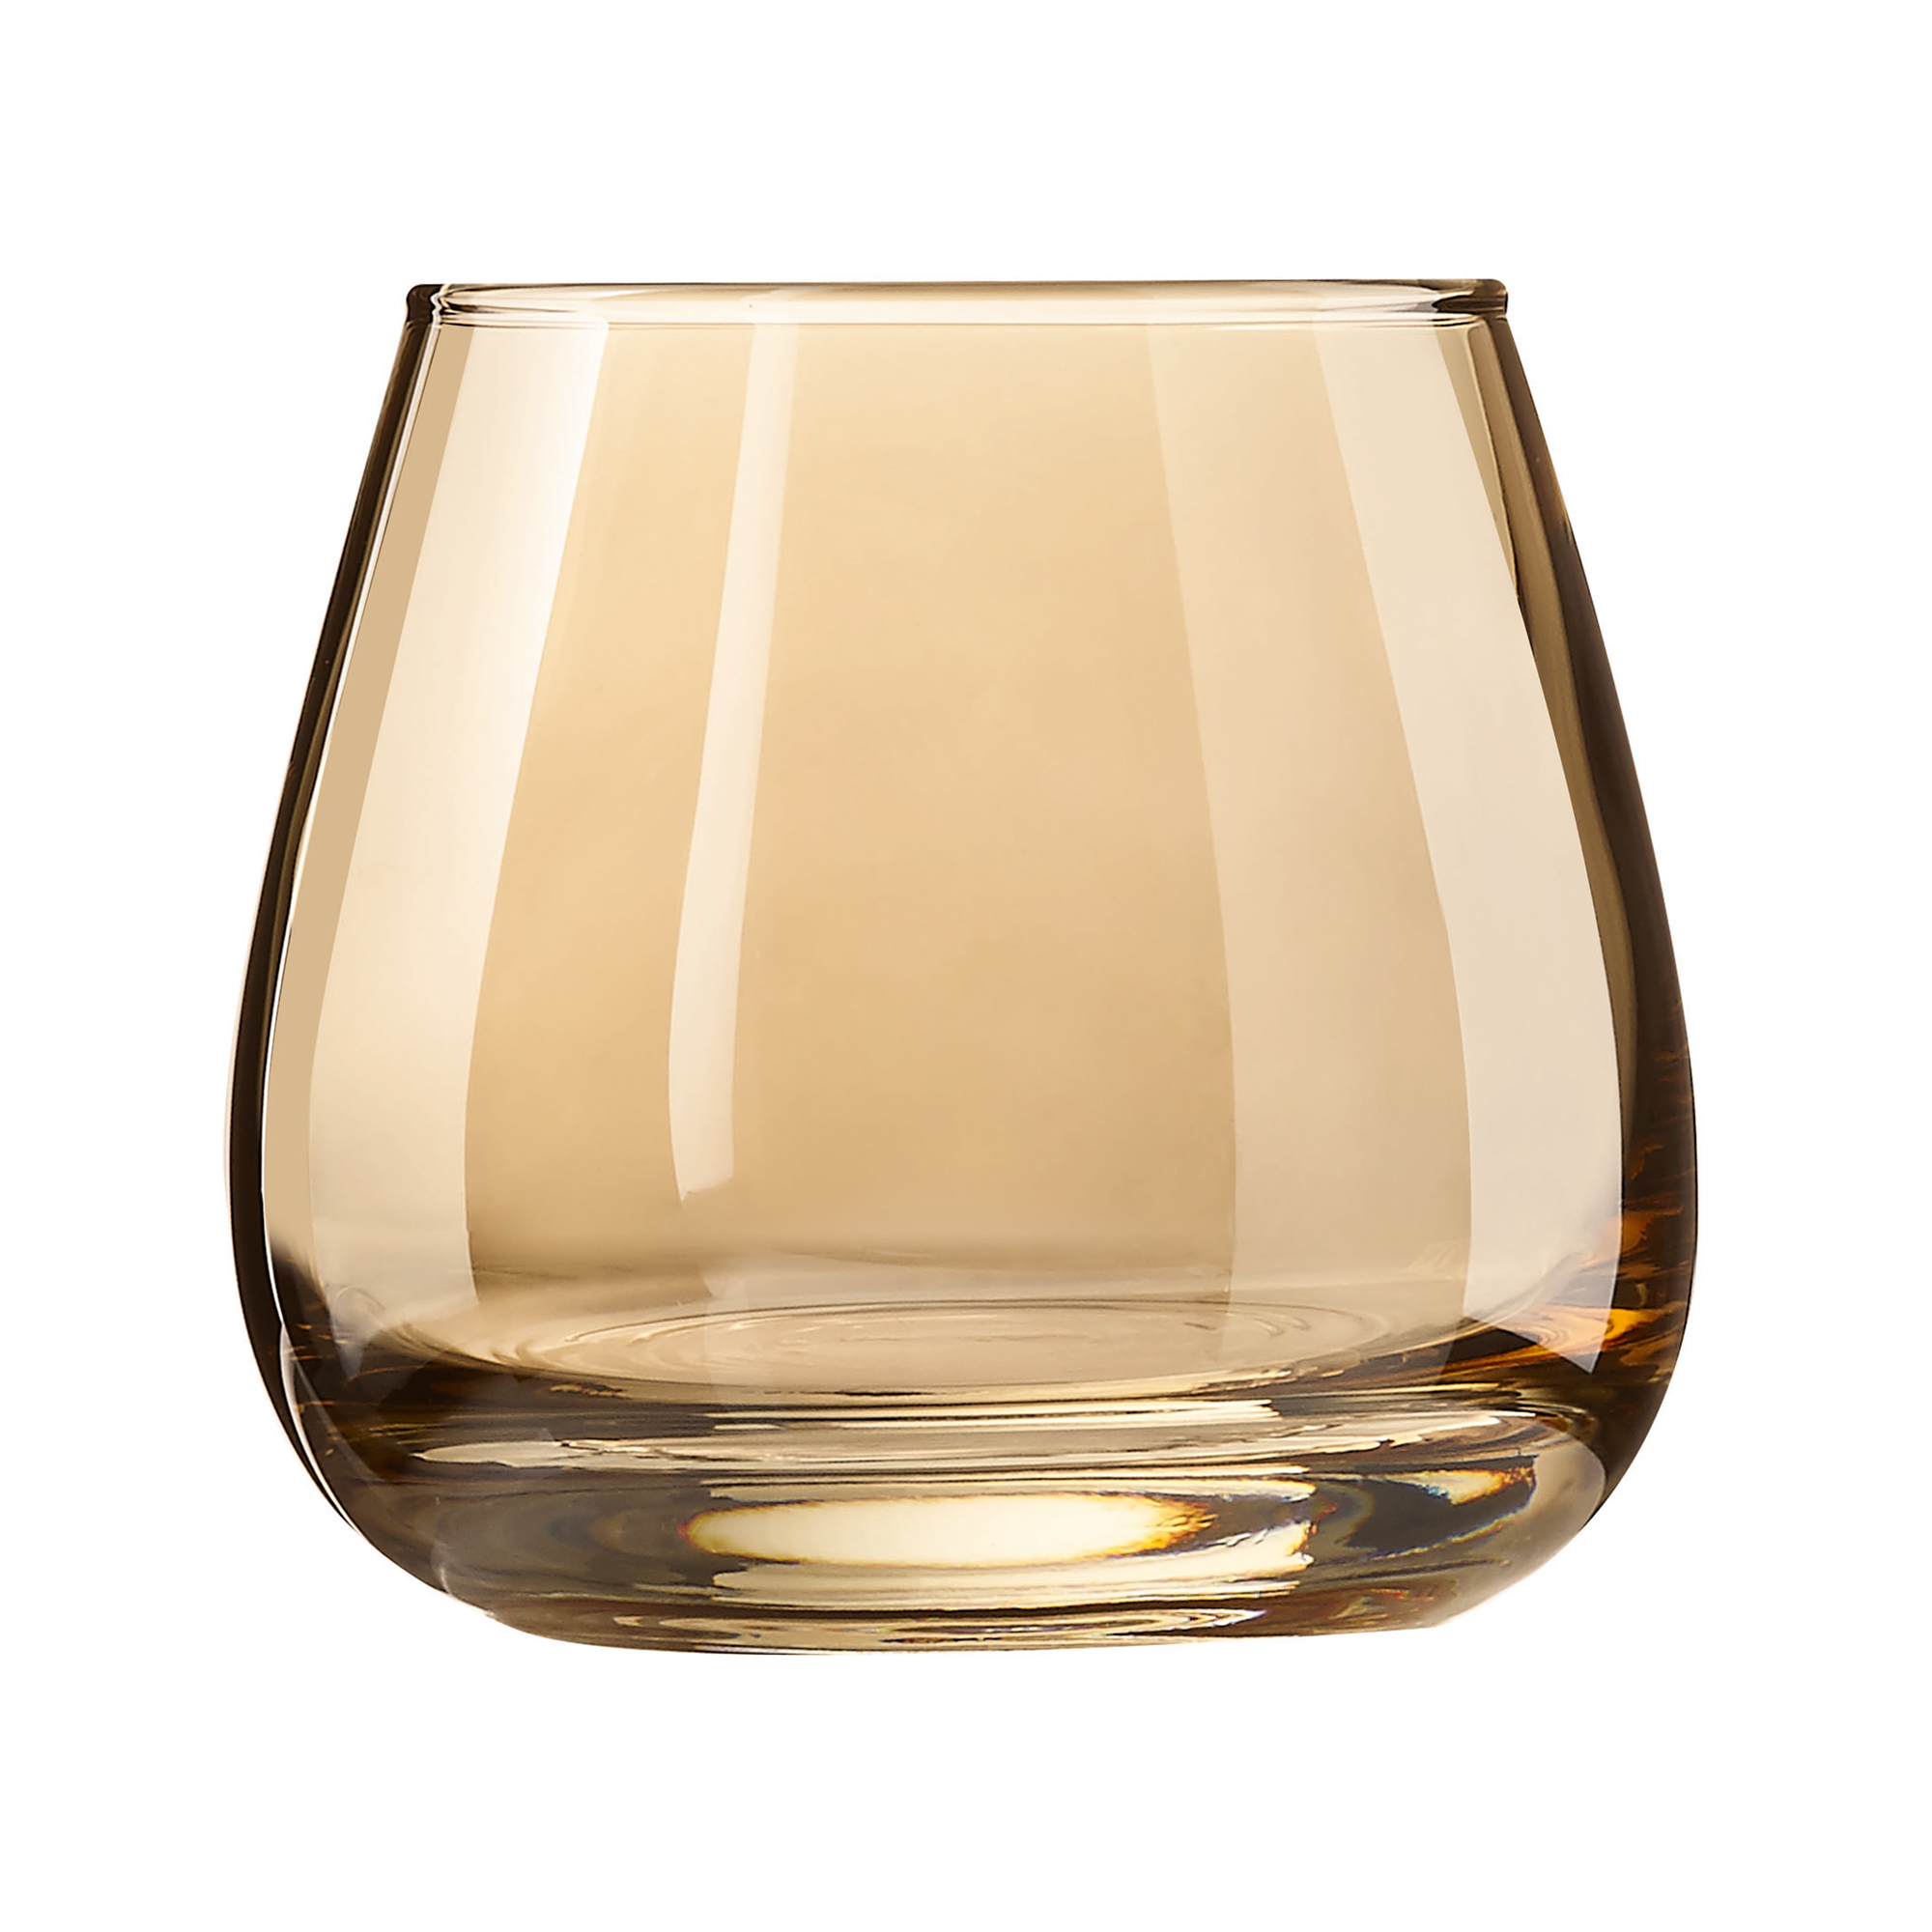 4 pezzi) Bicchiere da cognac - PARIS - 800 ml